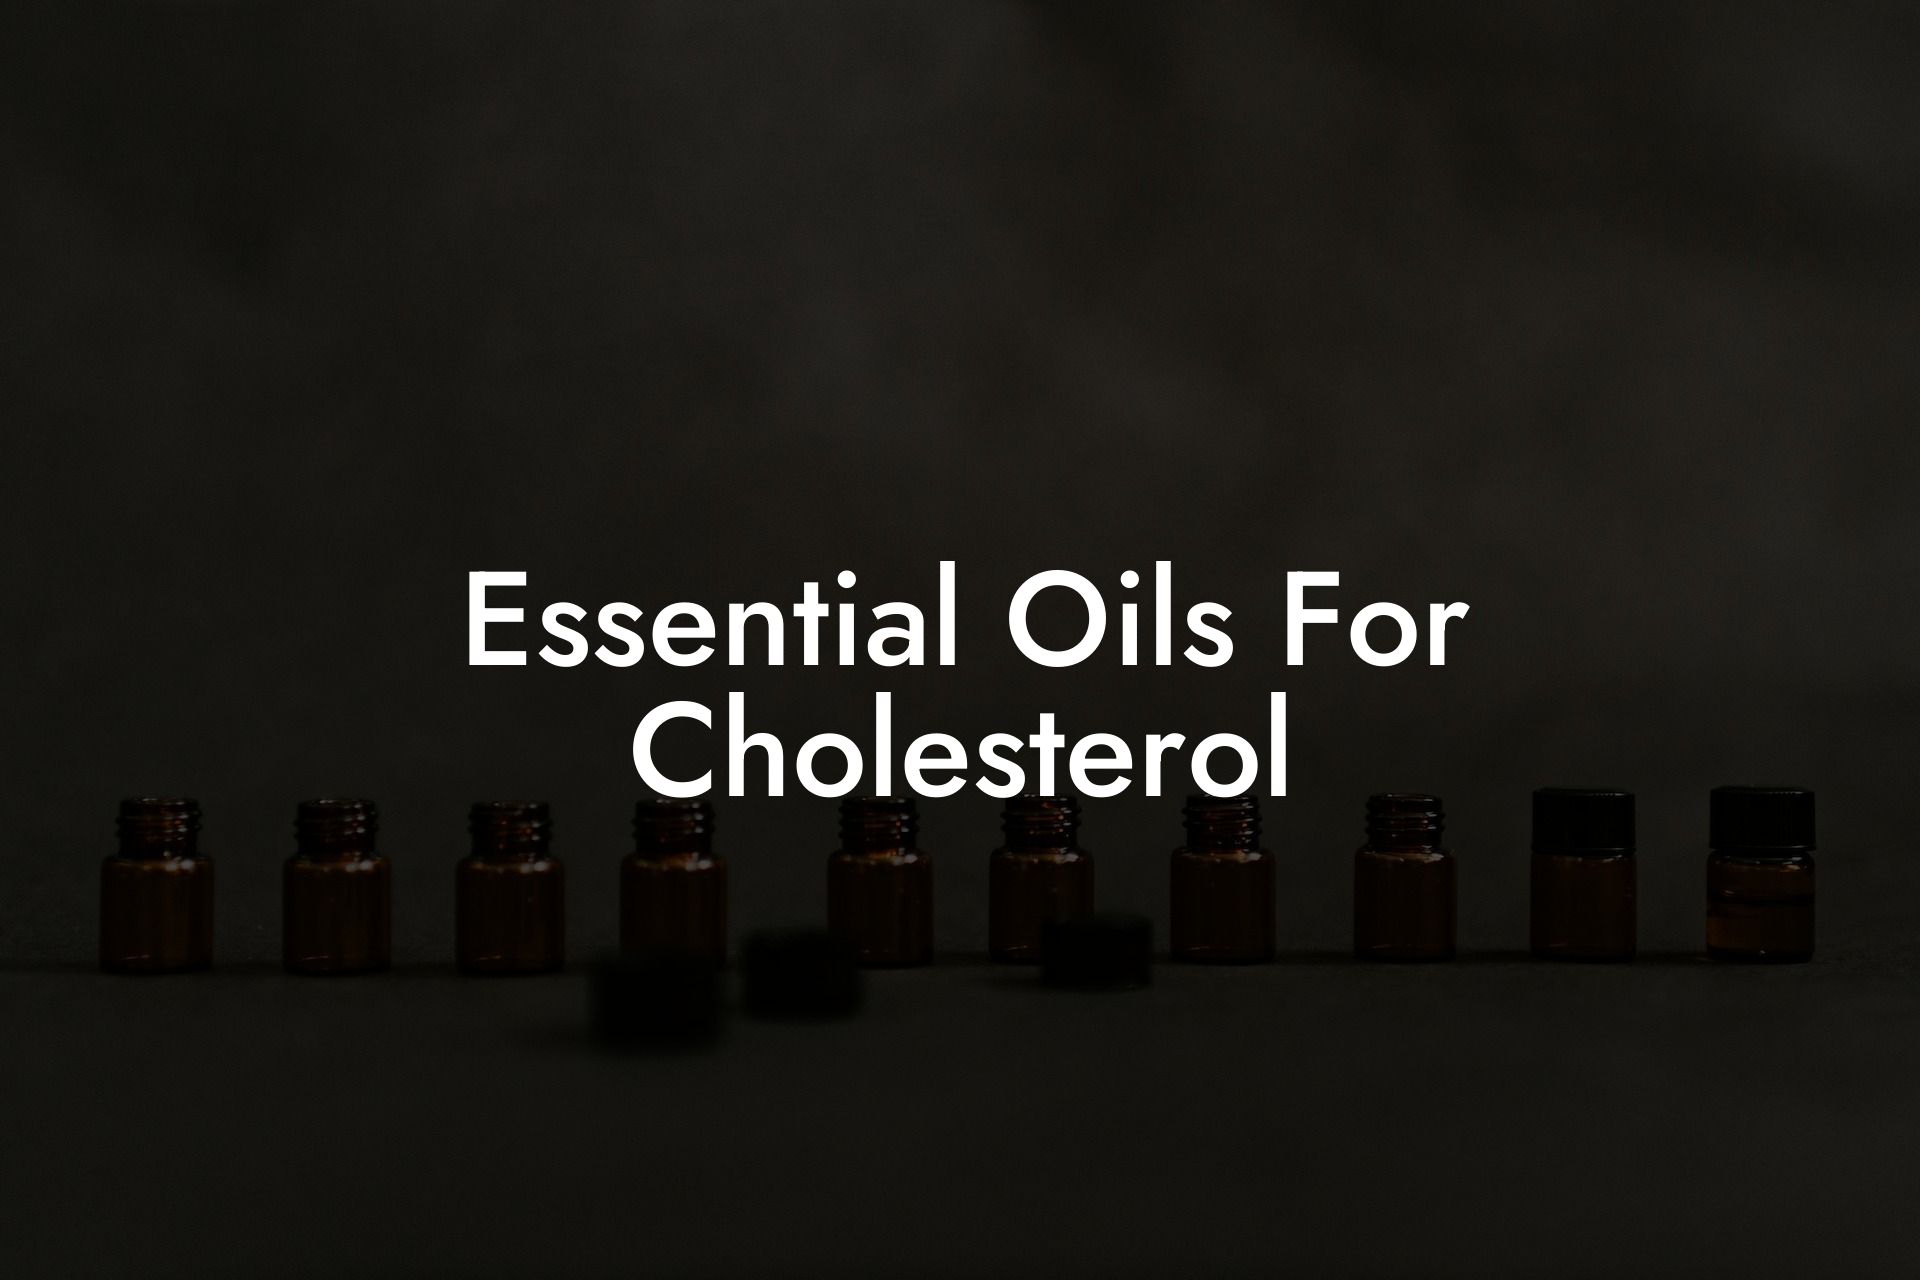 Essential Oils For Cholesterol